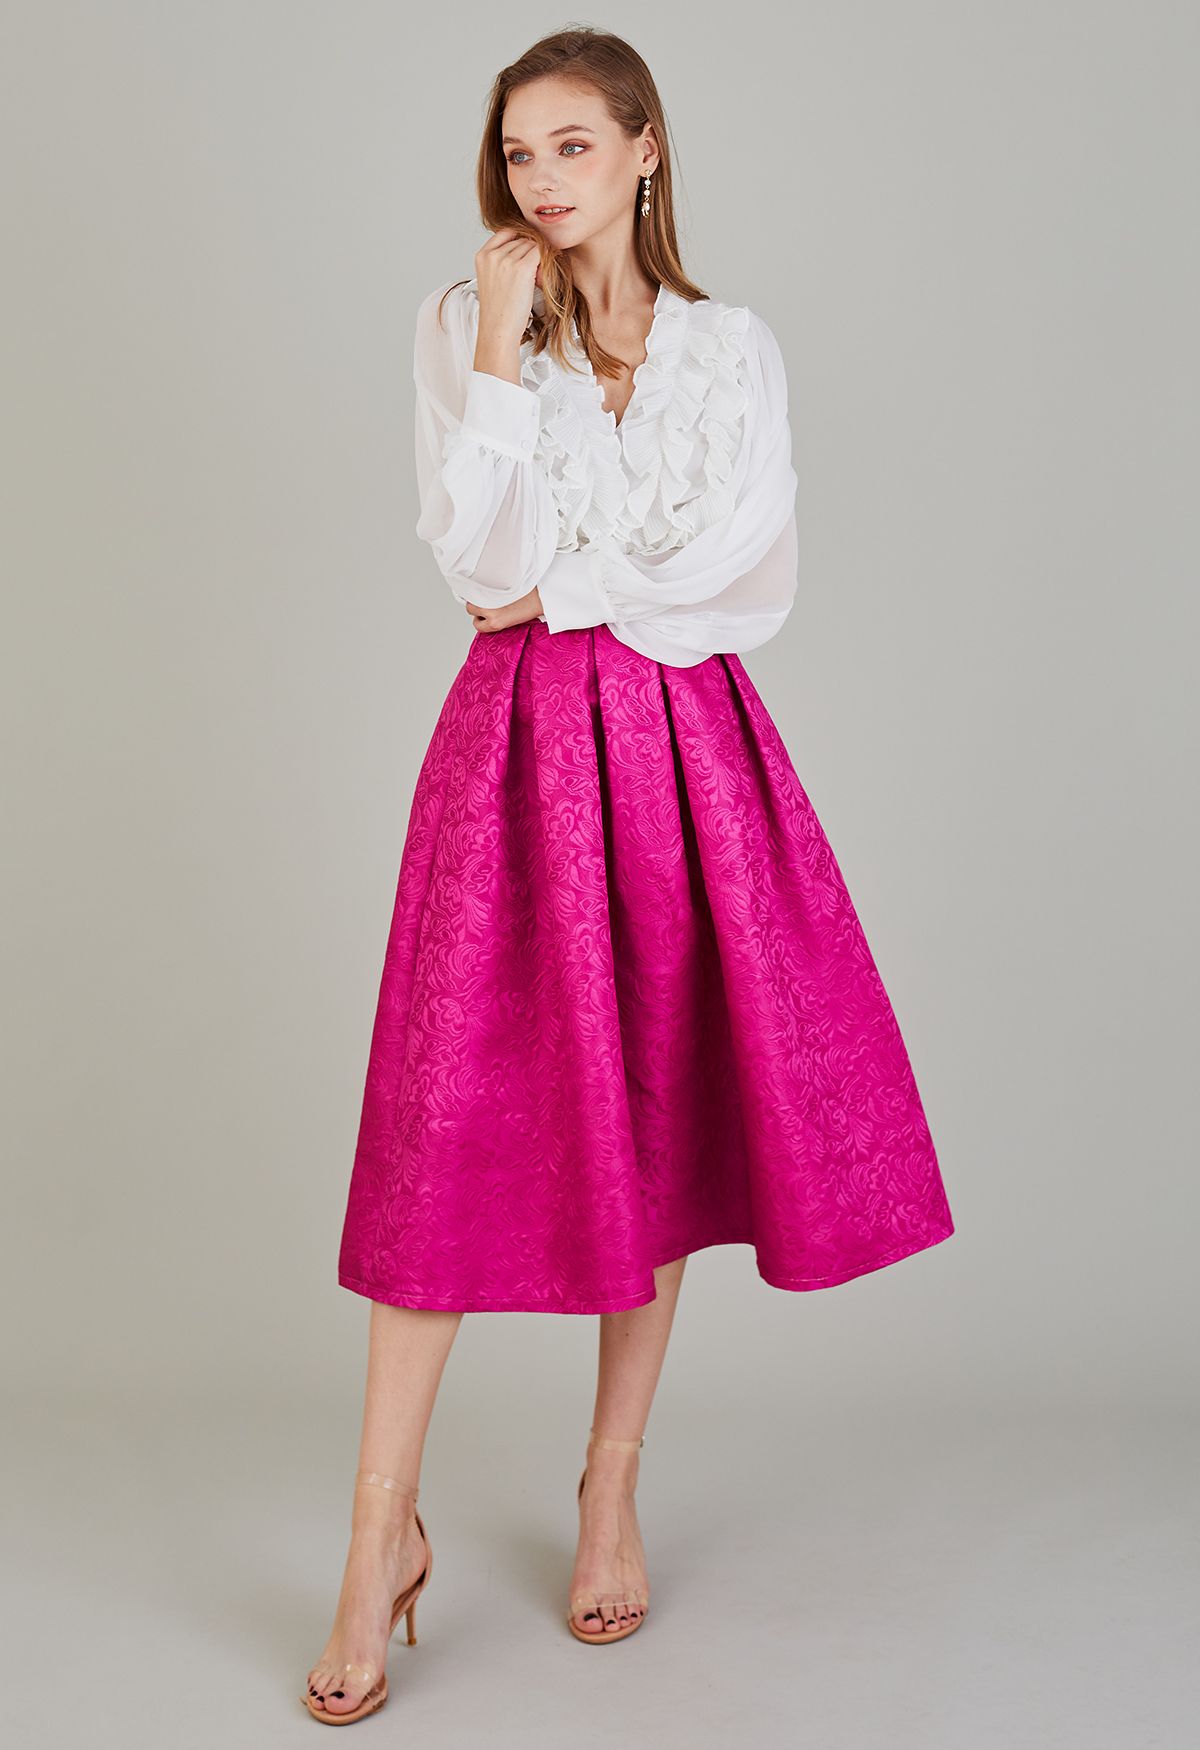 Noble Embossed Floral Jacquard Midi Skirt in Magenta